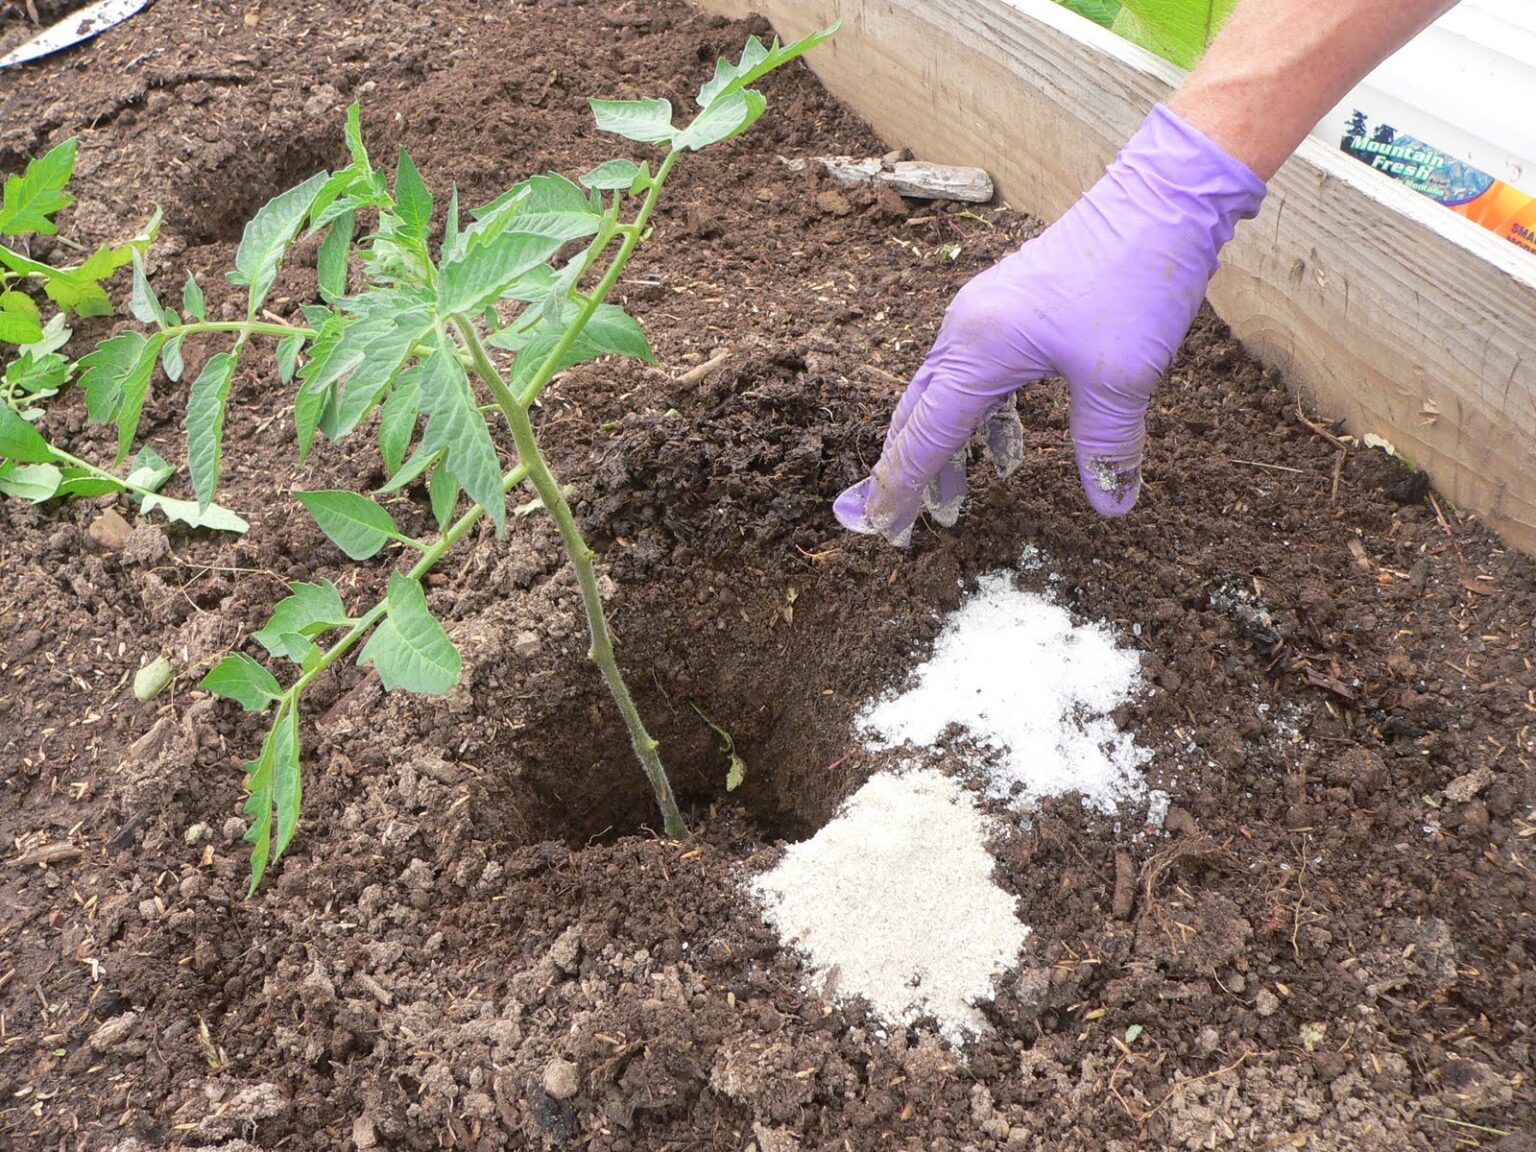 Heres Why You Must Use Epsom Salt In Garden Gardening Sun